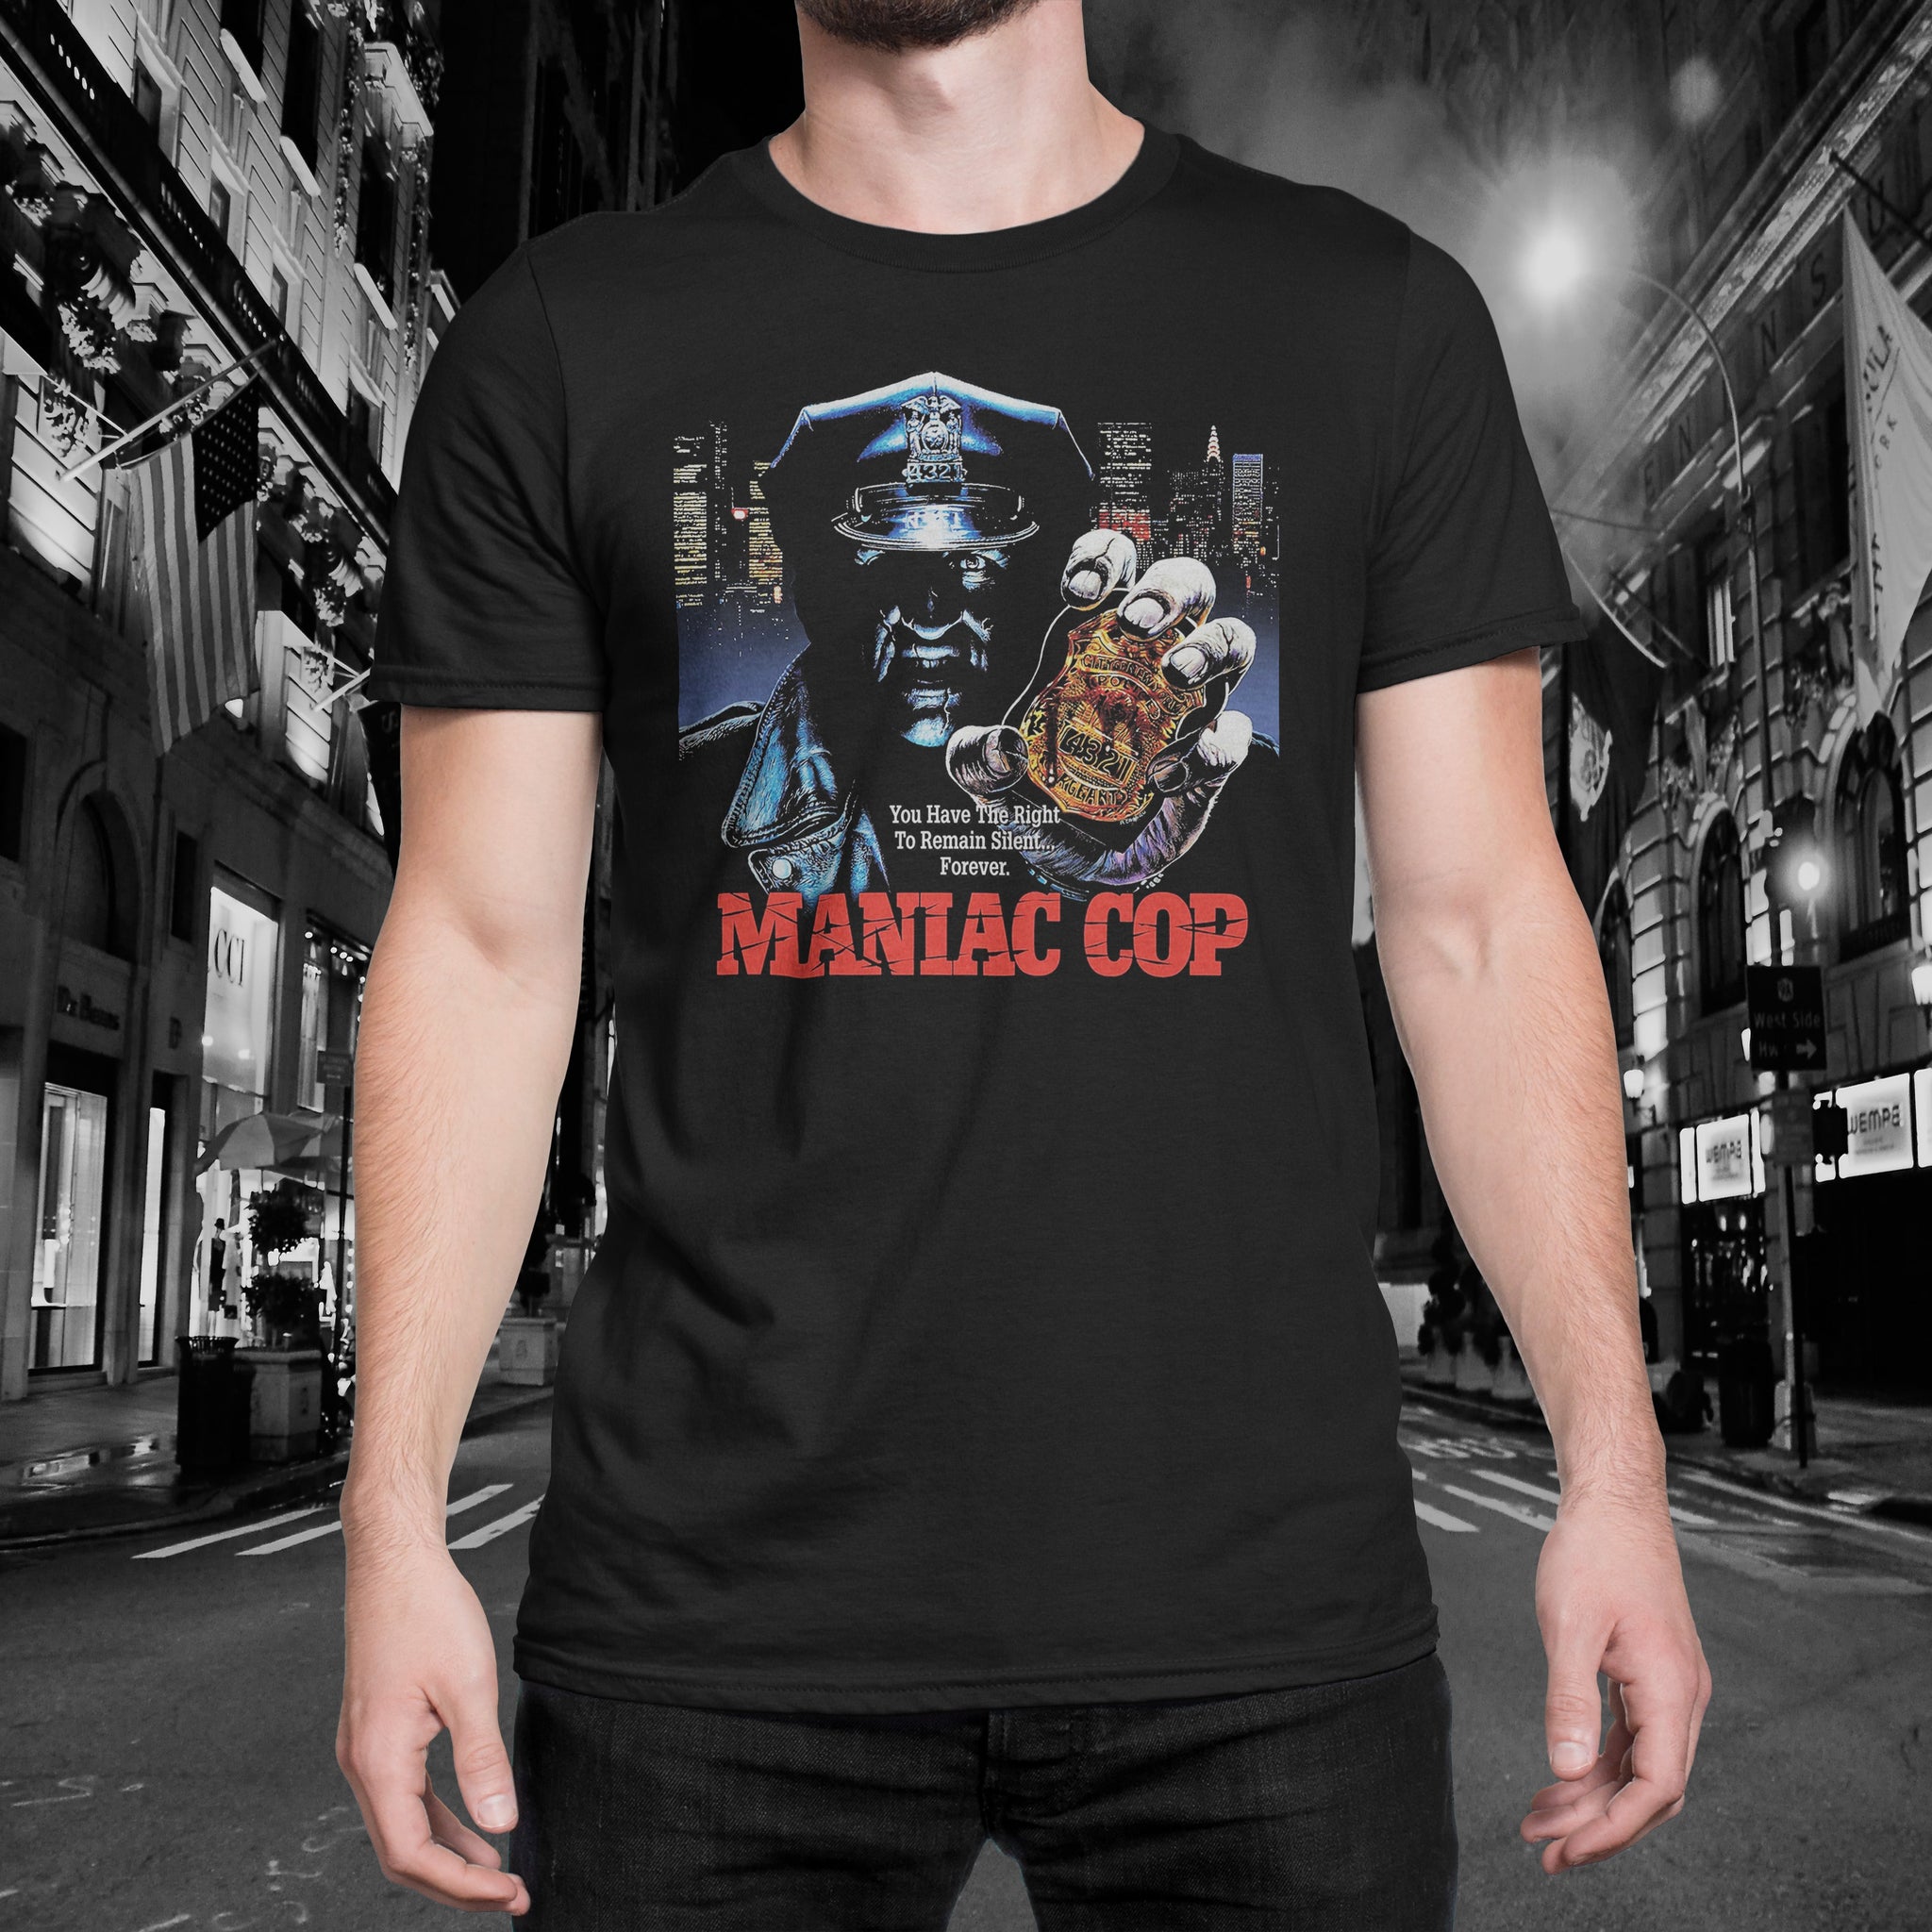 Maniac Cop Tee